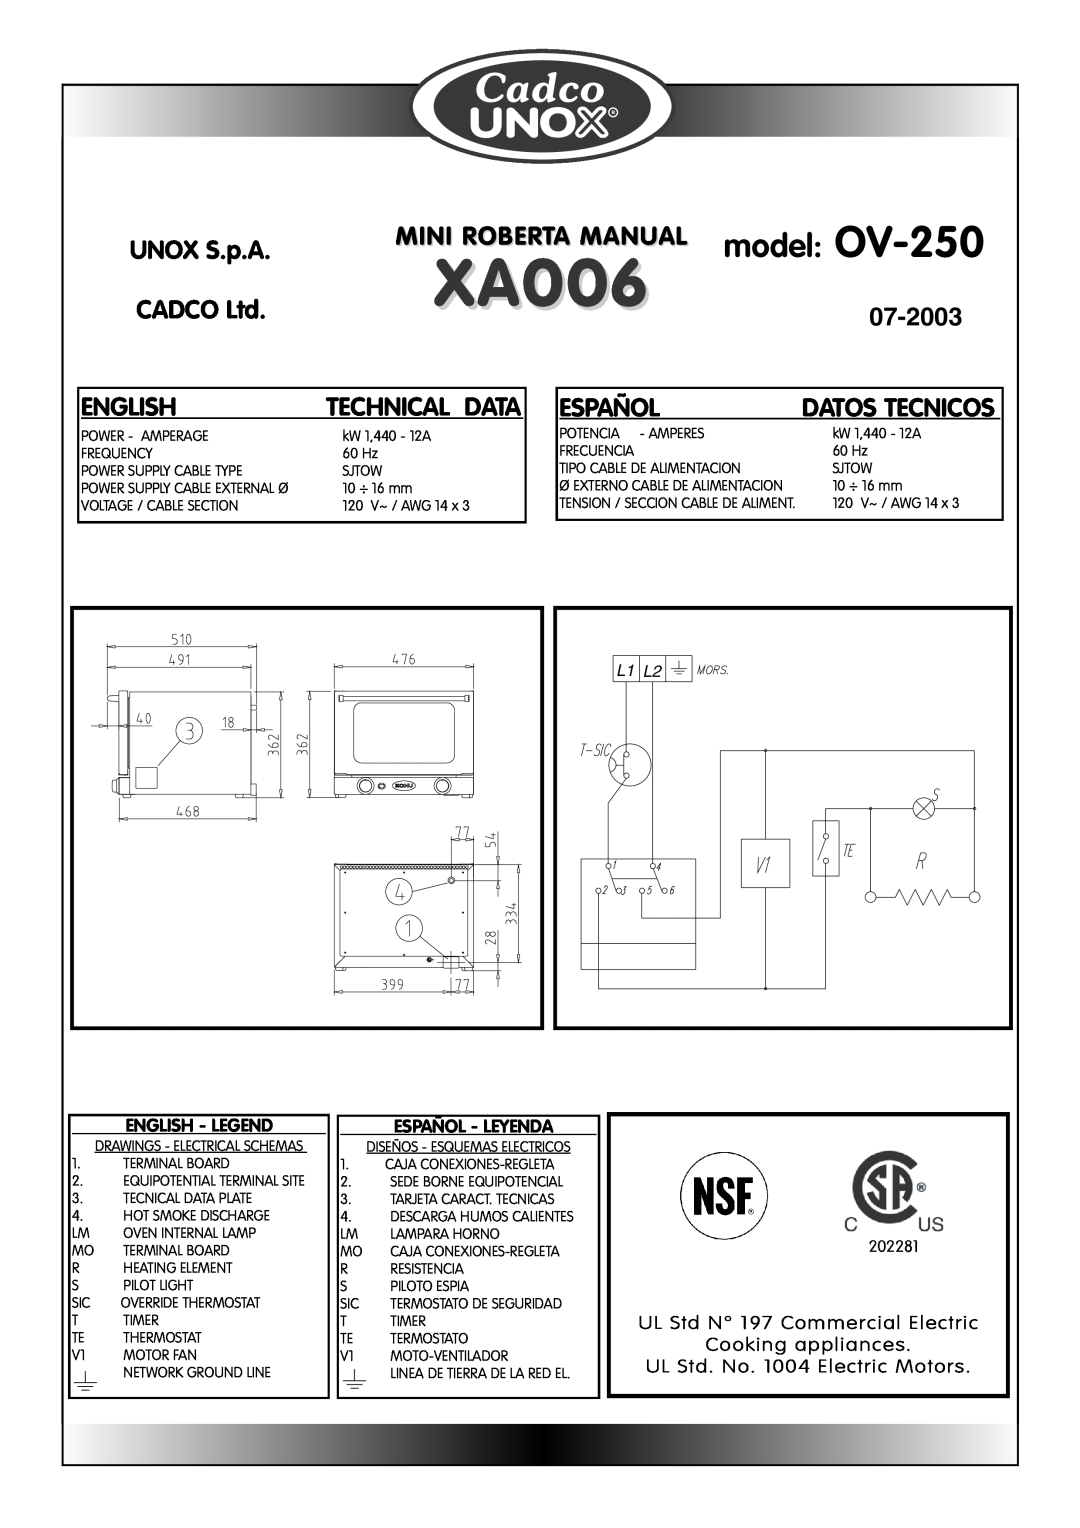 Cadco OV-400 model OV-250, XA006, UNOX S.p.A, Mini Roberta Manual, 07-2003, English, Español, Technical Data, L1 L2 